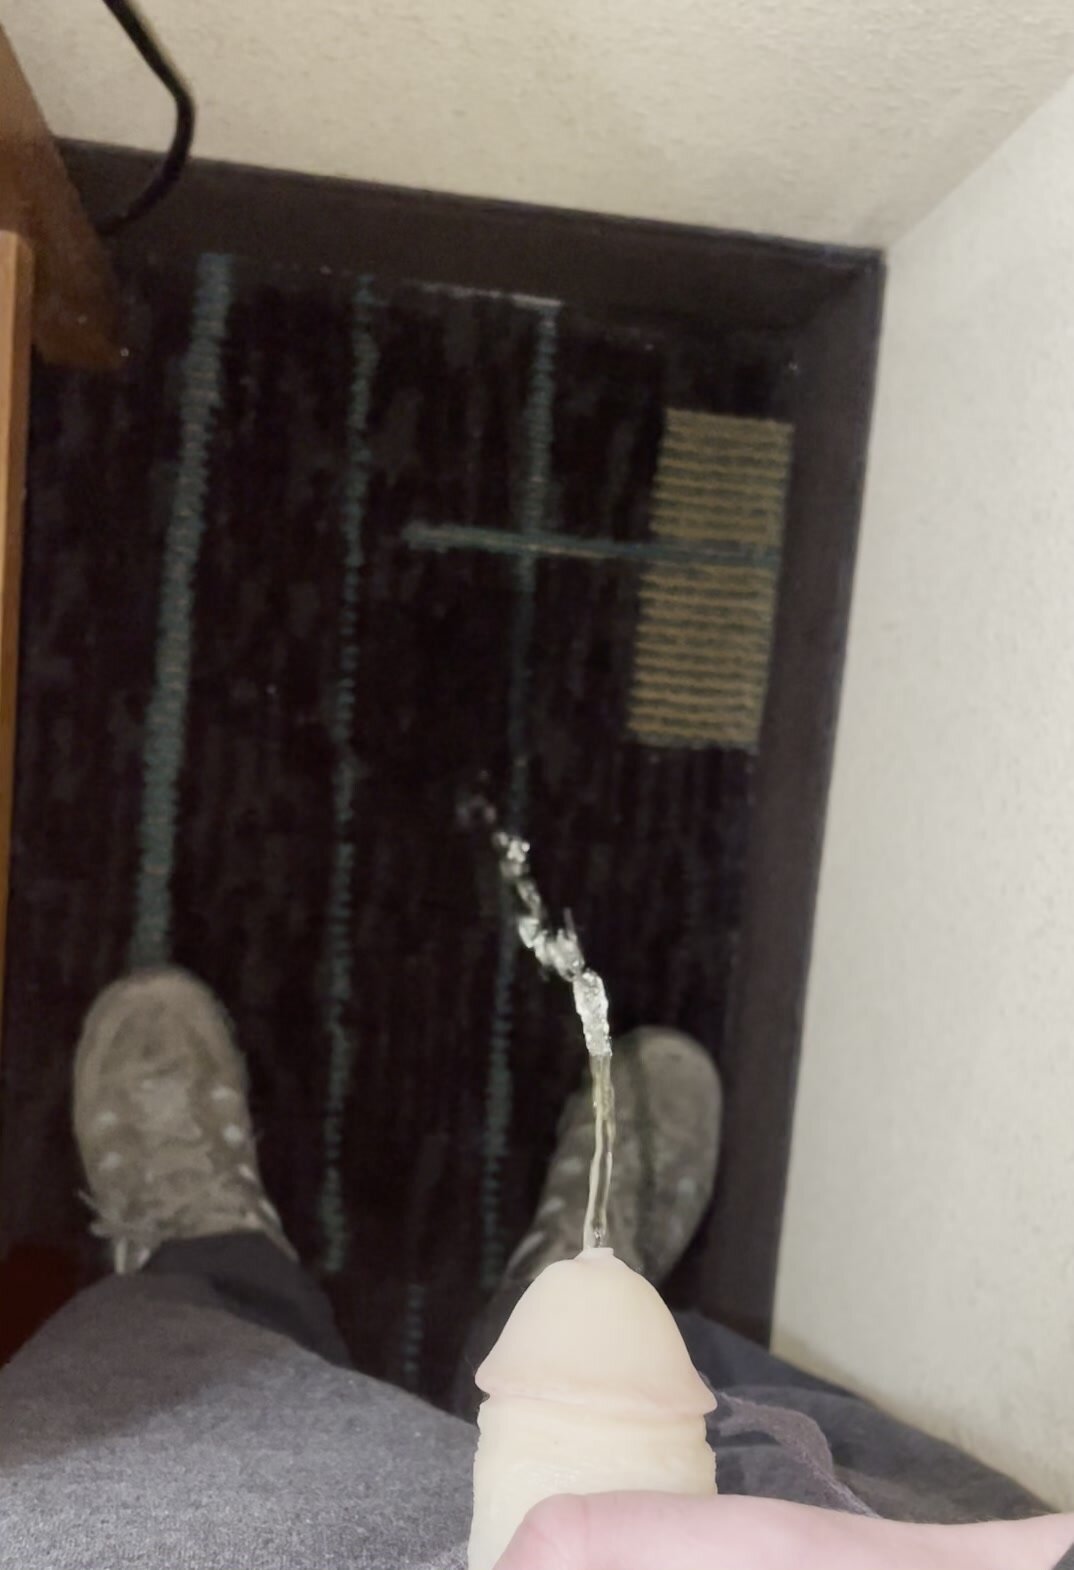 piss on hotel carpet